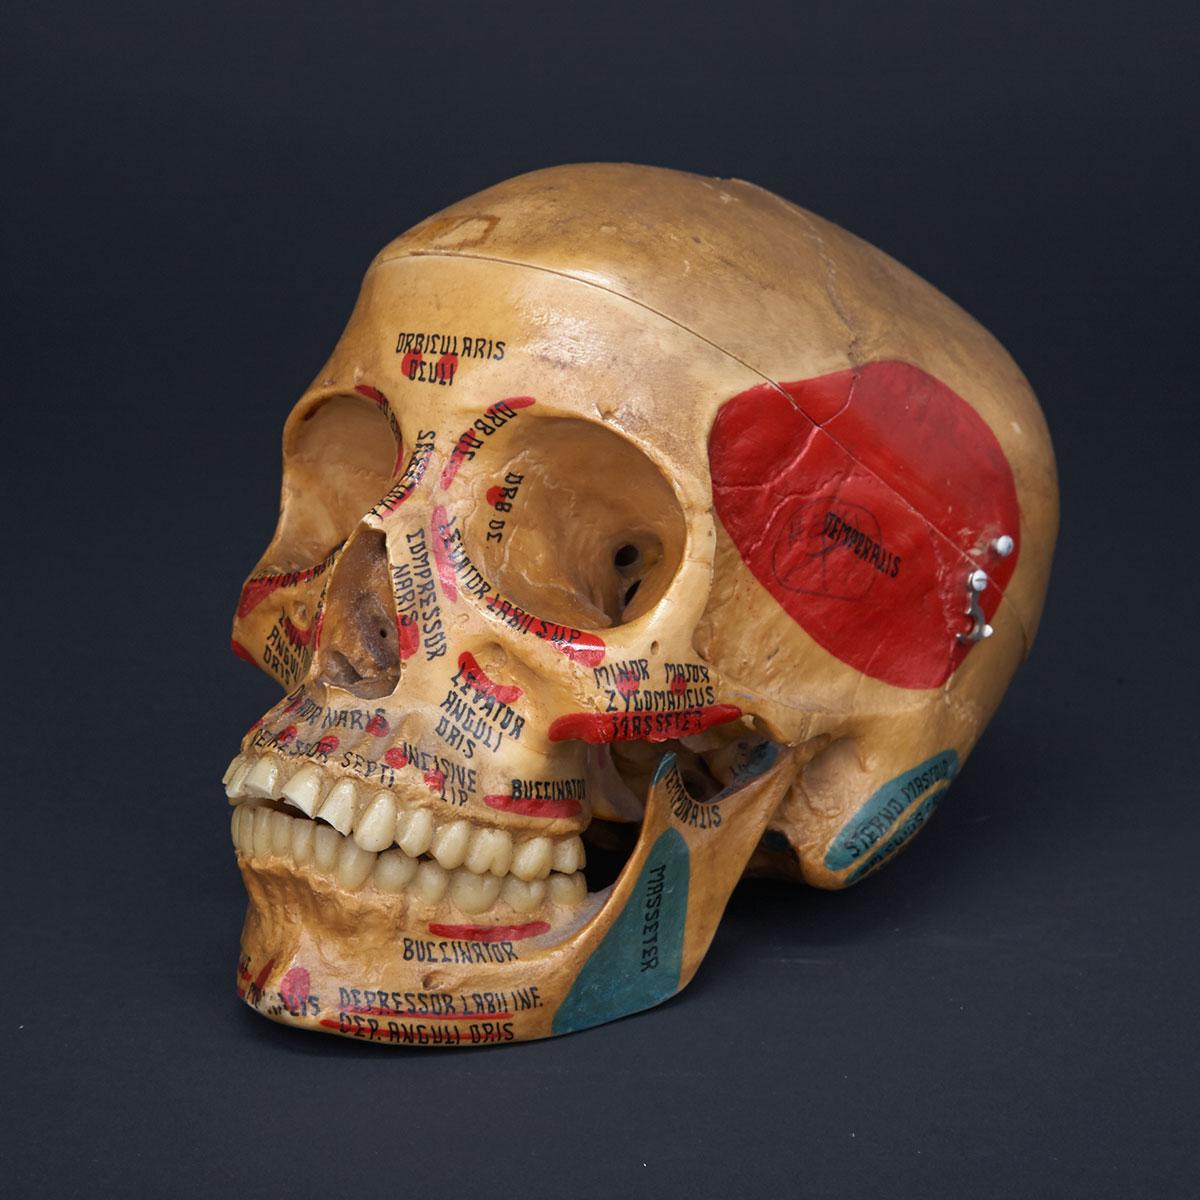 Polychromed Resin Anatomical Study Model of Human Skull, Medical Plastics Lab, Texas, mid 20th century